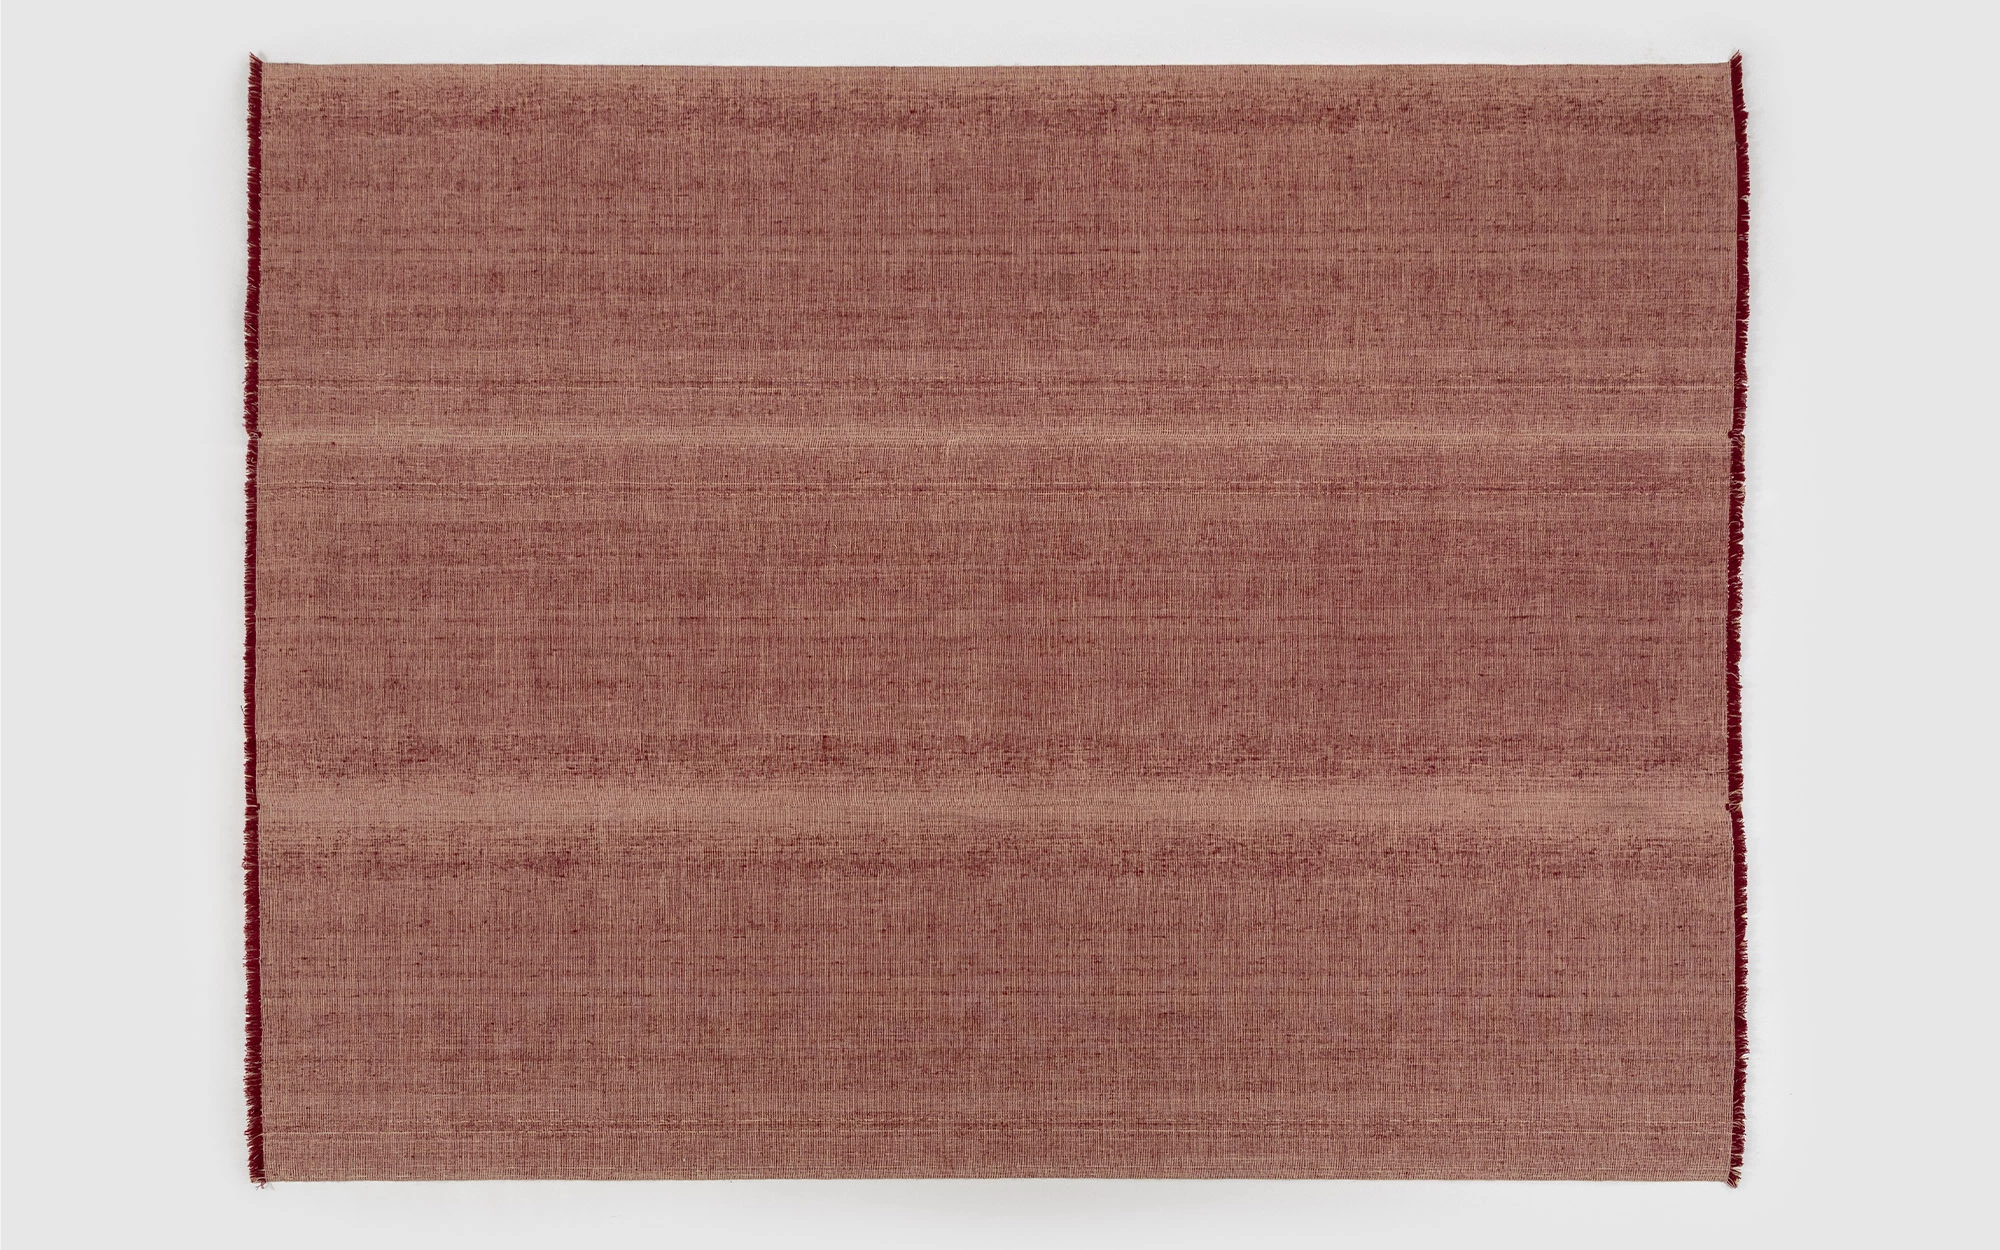 Wilton Carpet L - Ronan & Erwan Bouroullec - Coffee table - Galerie kreo